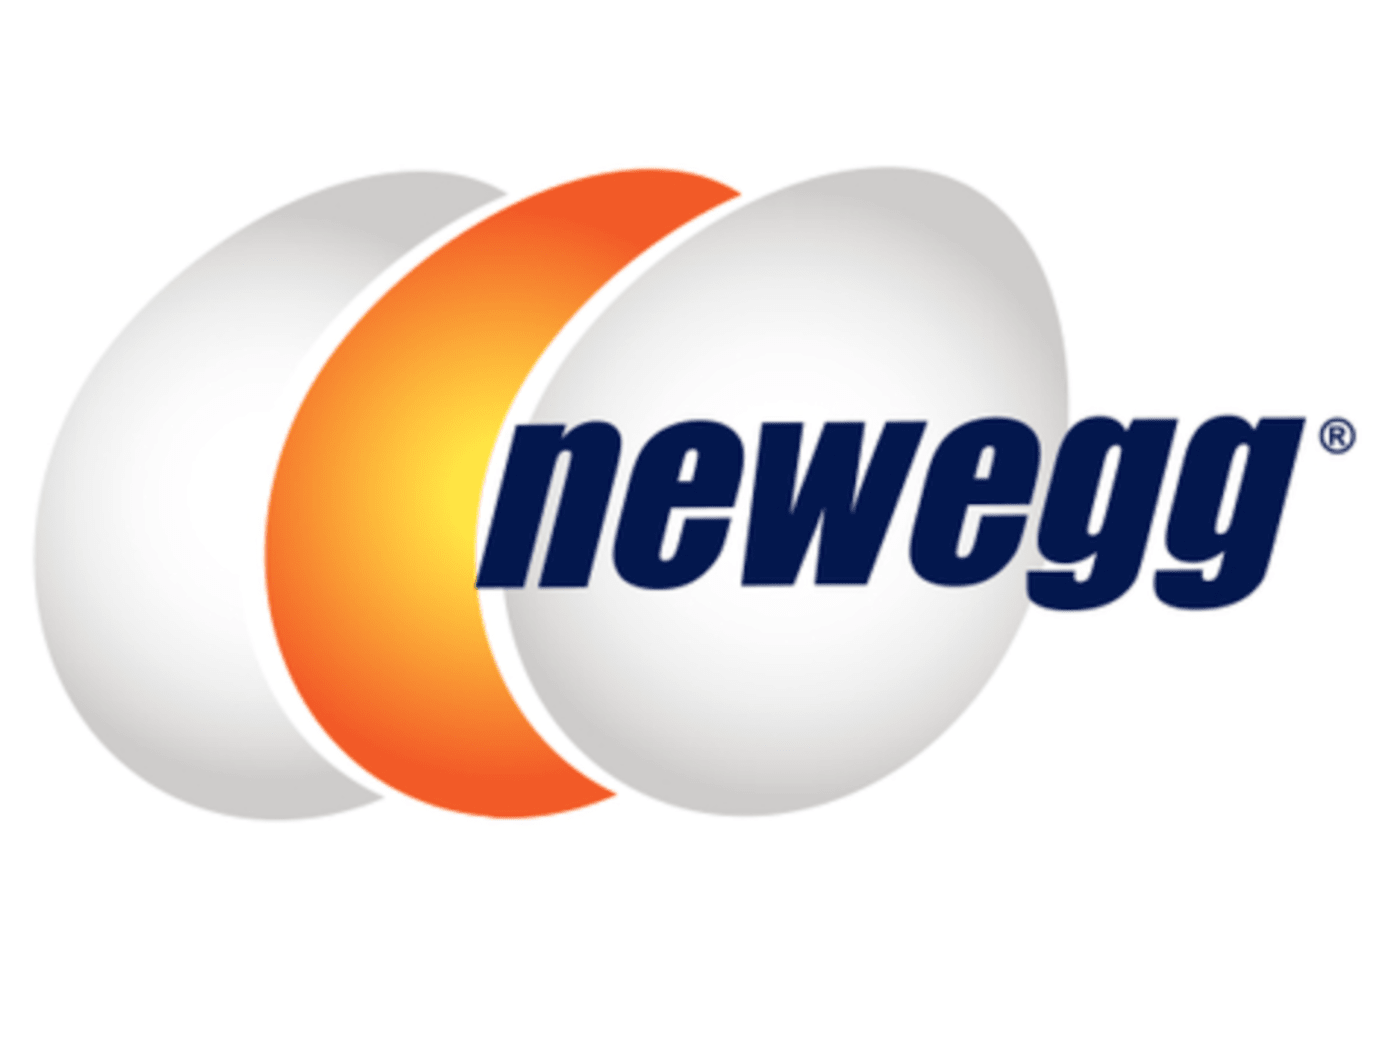 Newegg just started selling refurbished electronics